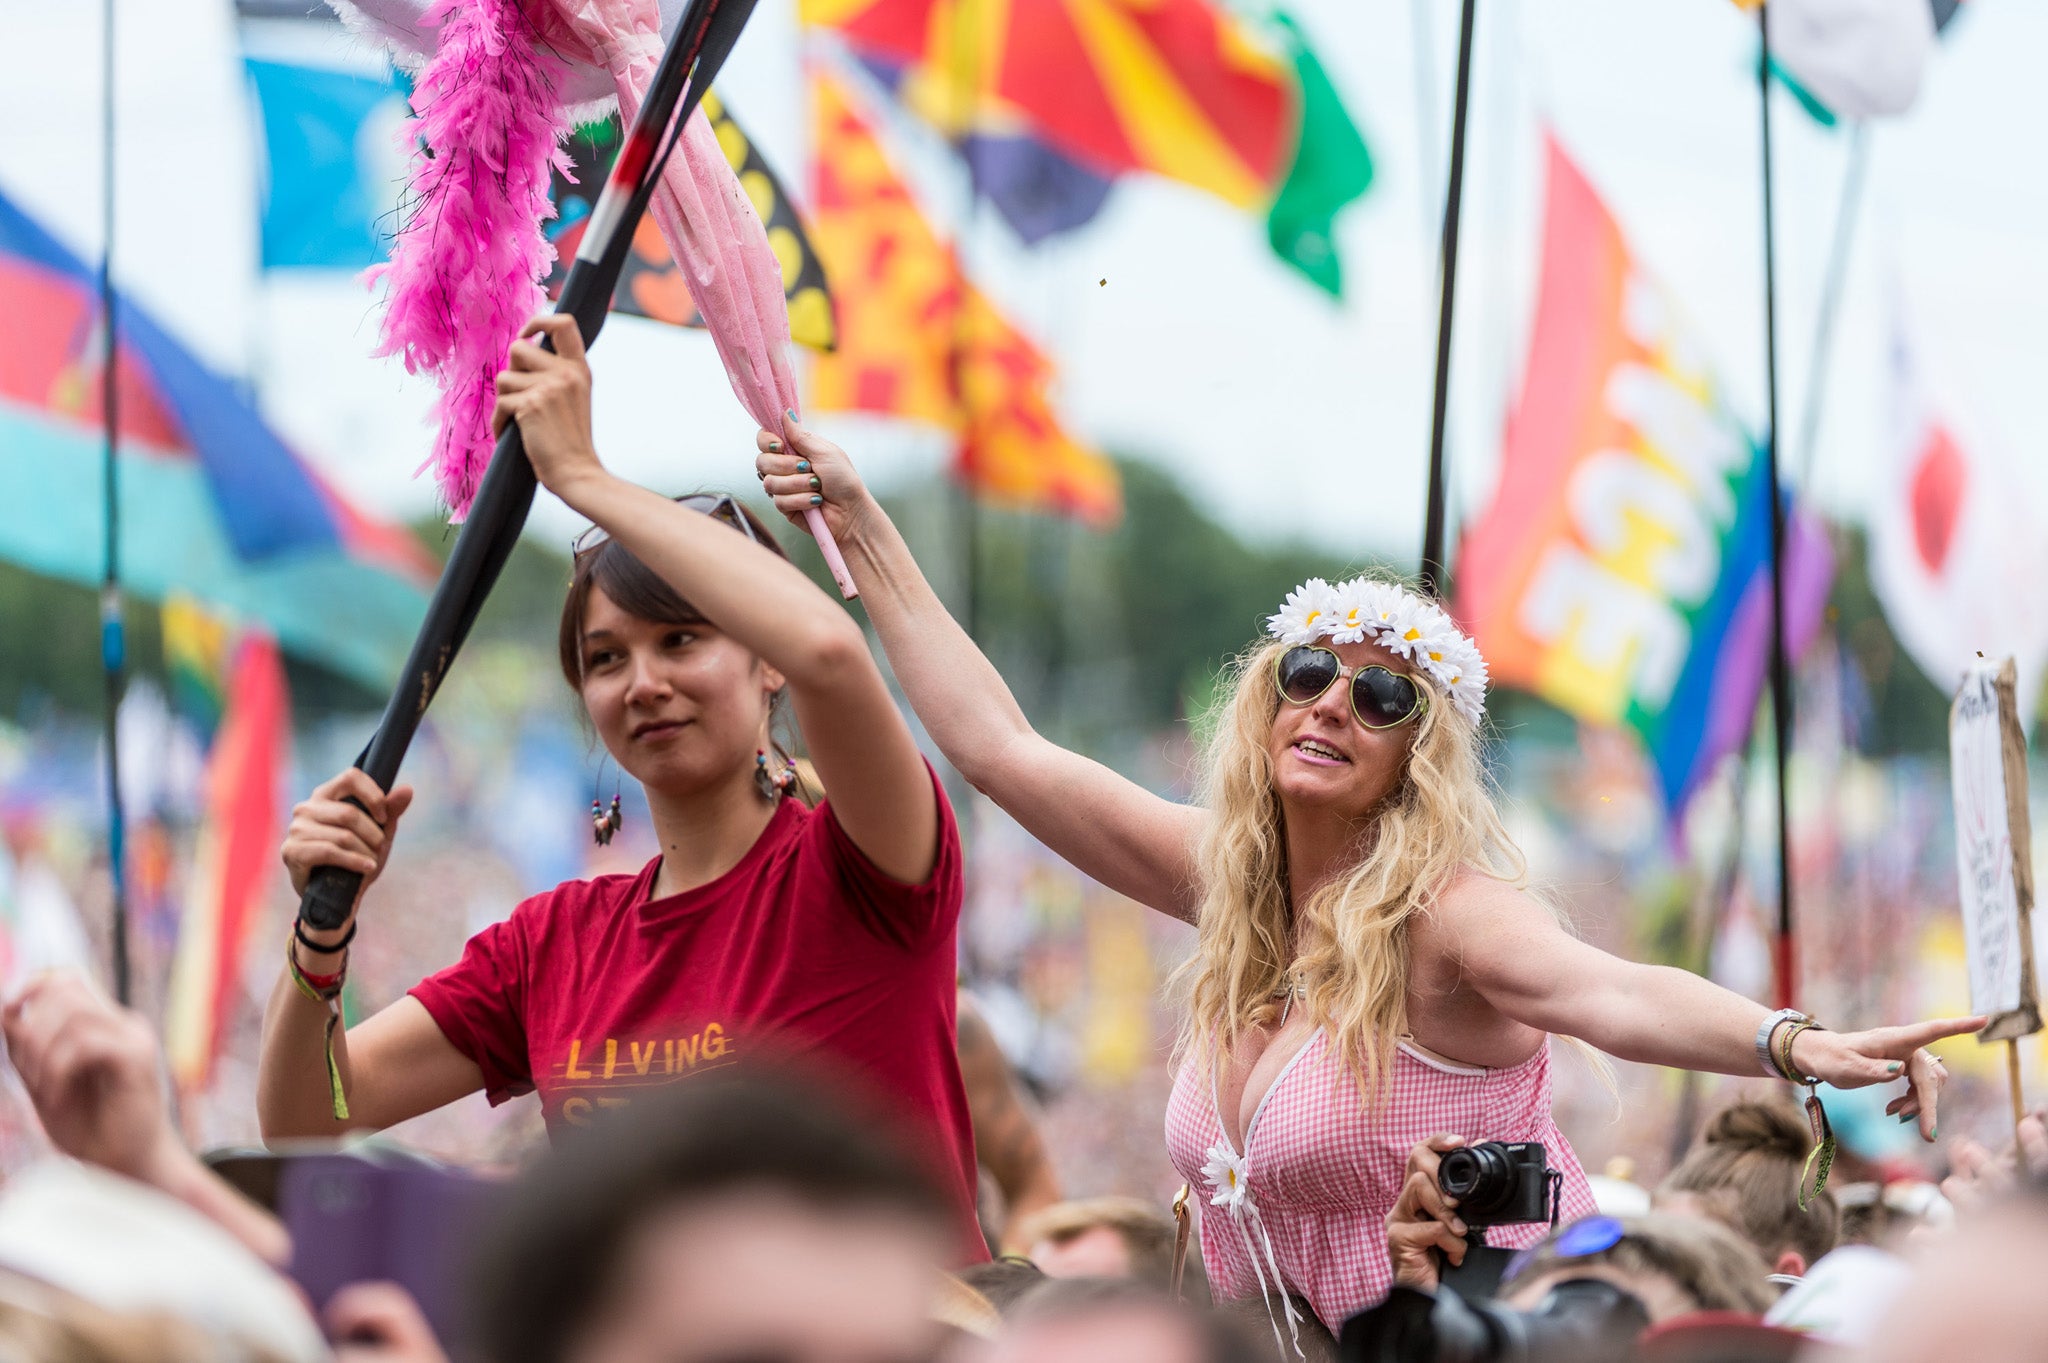 Festival-goers soak up the atmosphere at Glastonbury 2014